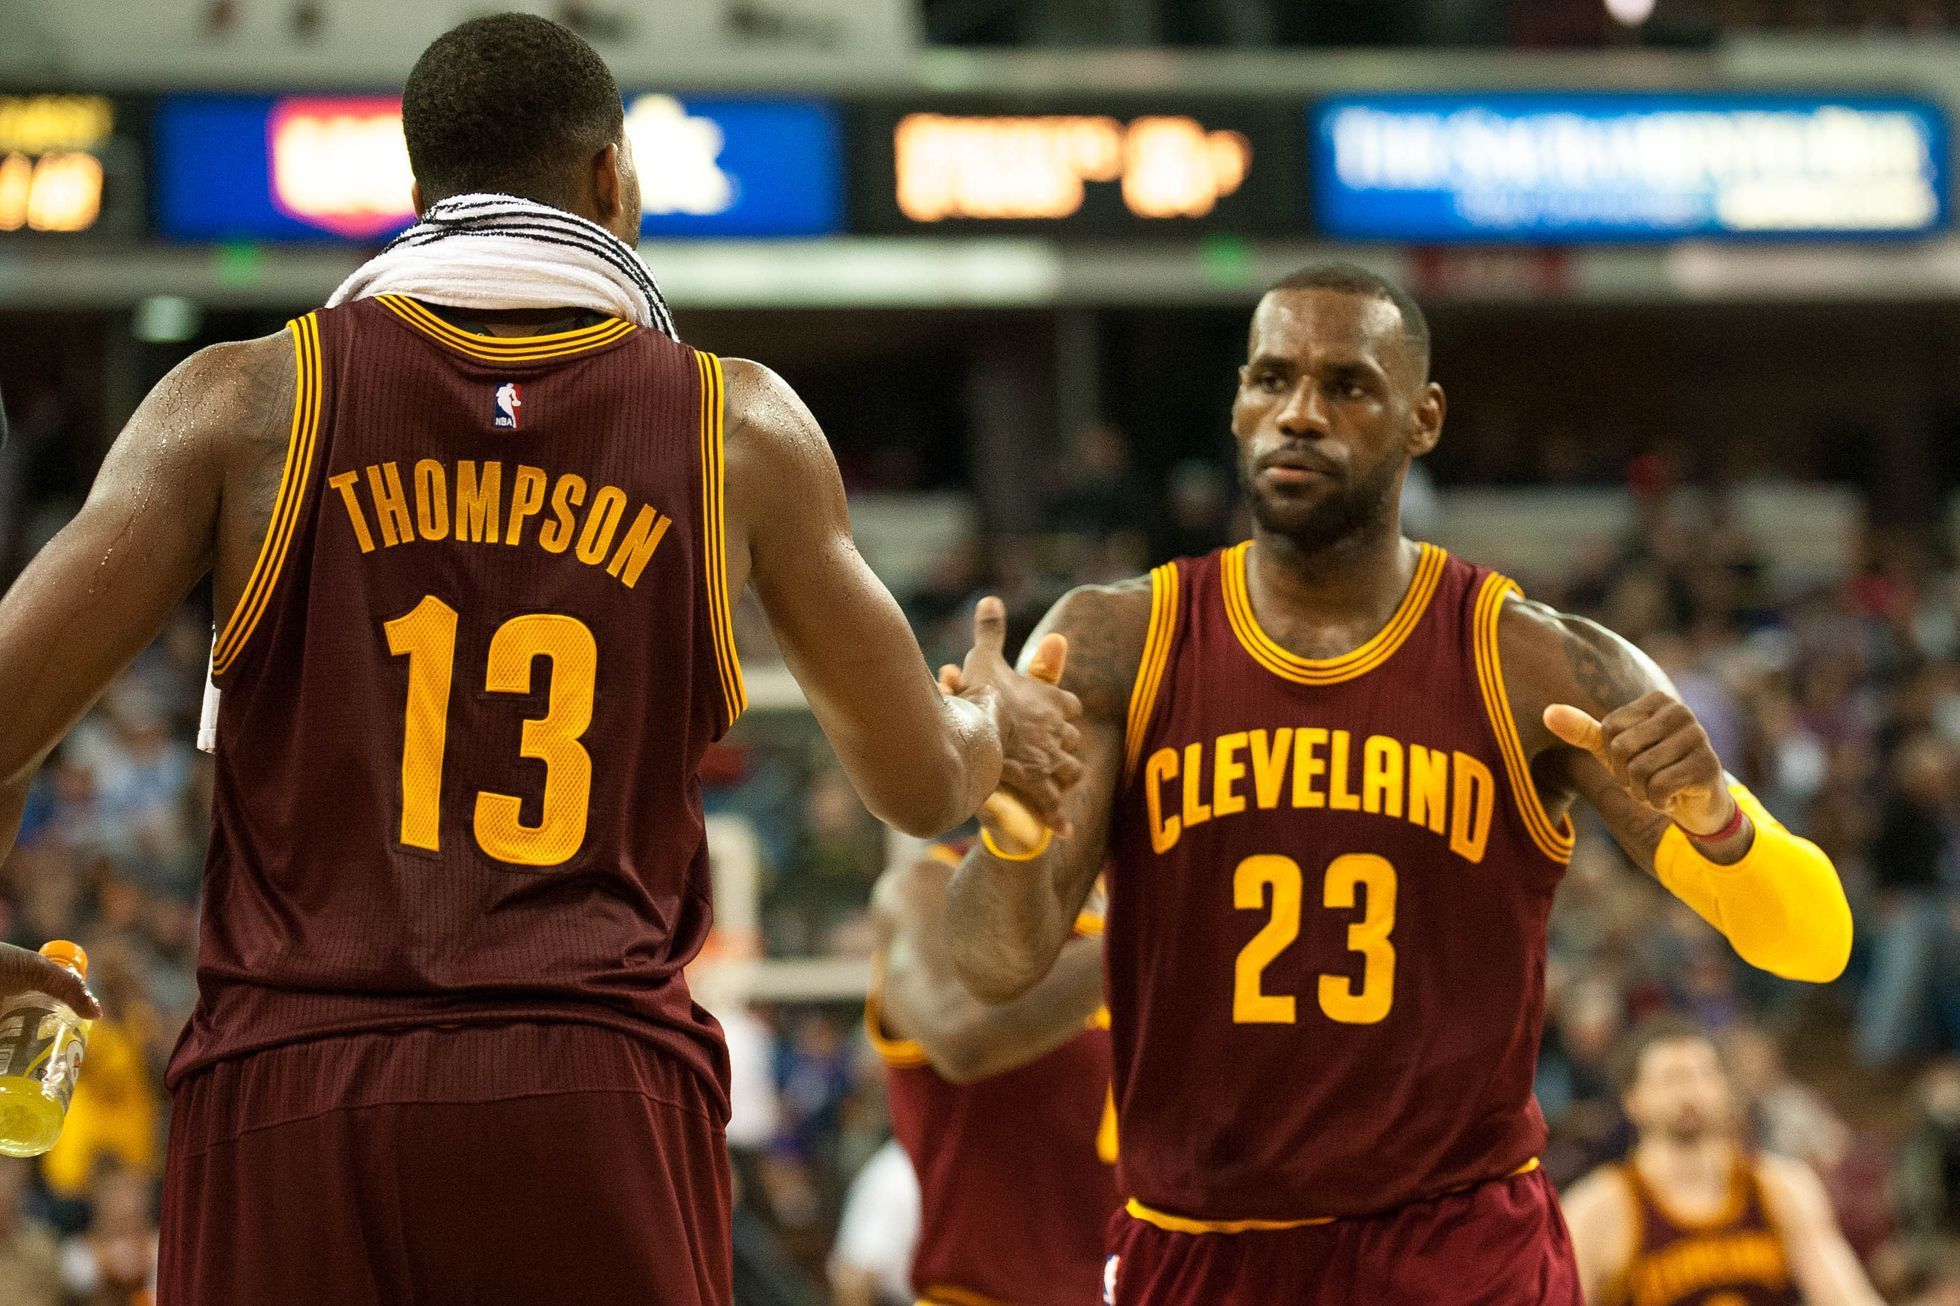 NBA: Cleveland Cavaliers vs. Sacramento Kings (Tristan Thompson, LeBron James)